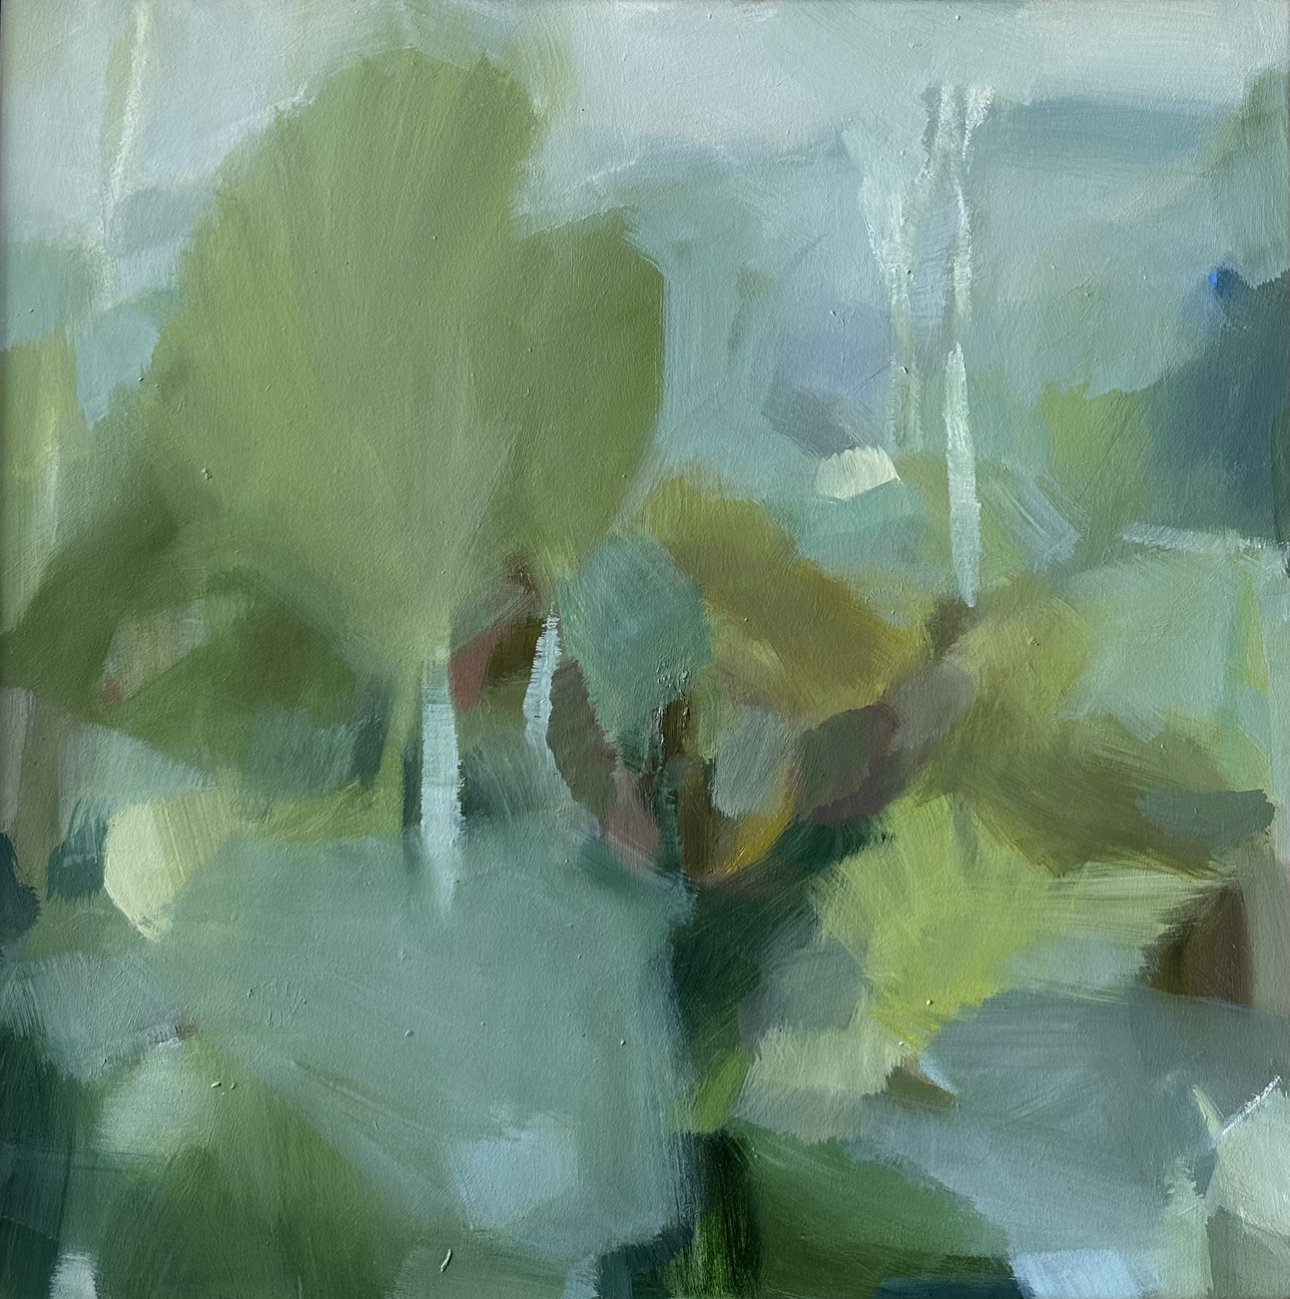 Peaceful Forest 61 x 61cm frame oil on canvas $2700